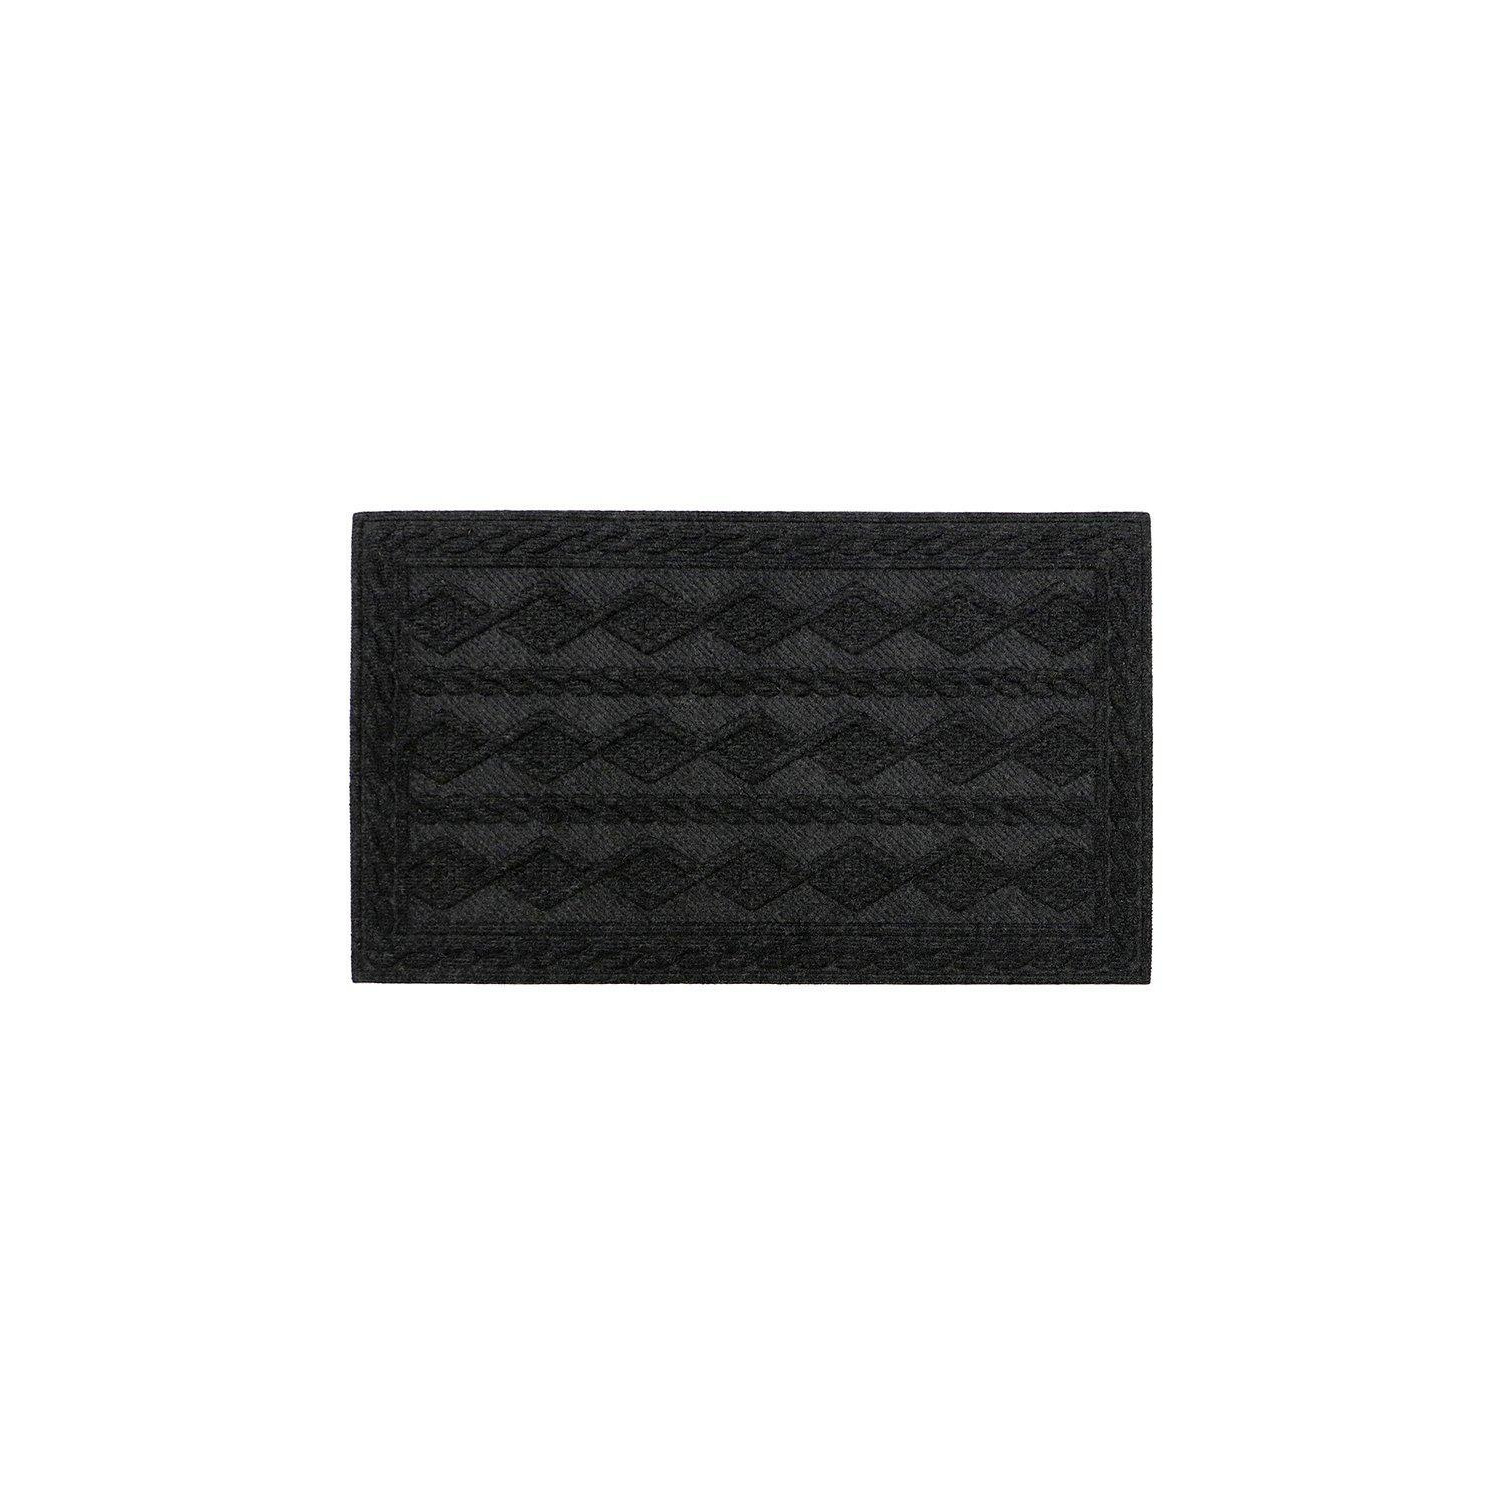 Knit Rubber Backed Indoor Doormat 45x75cm Charcoal - image 1